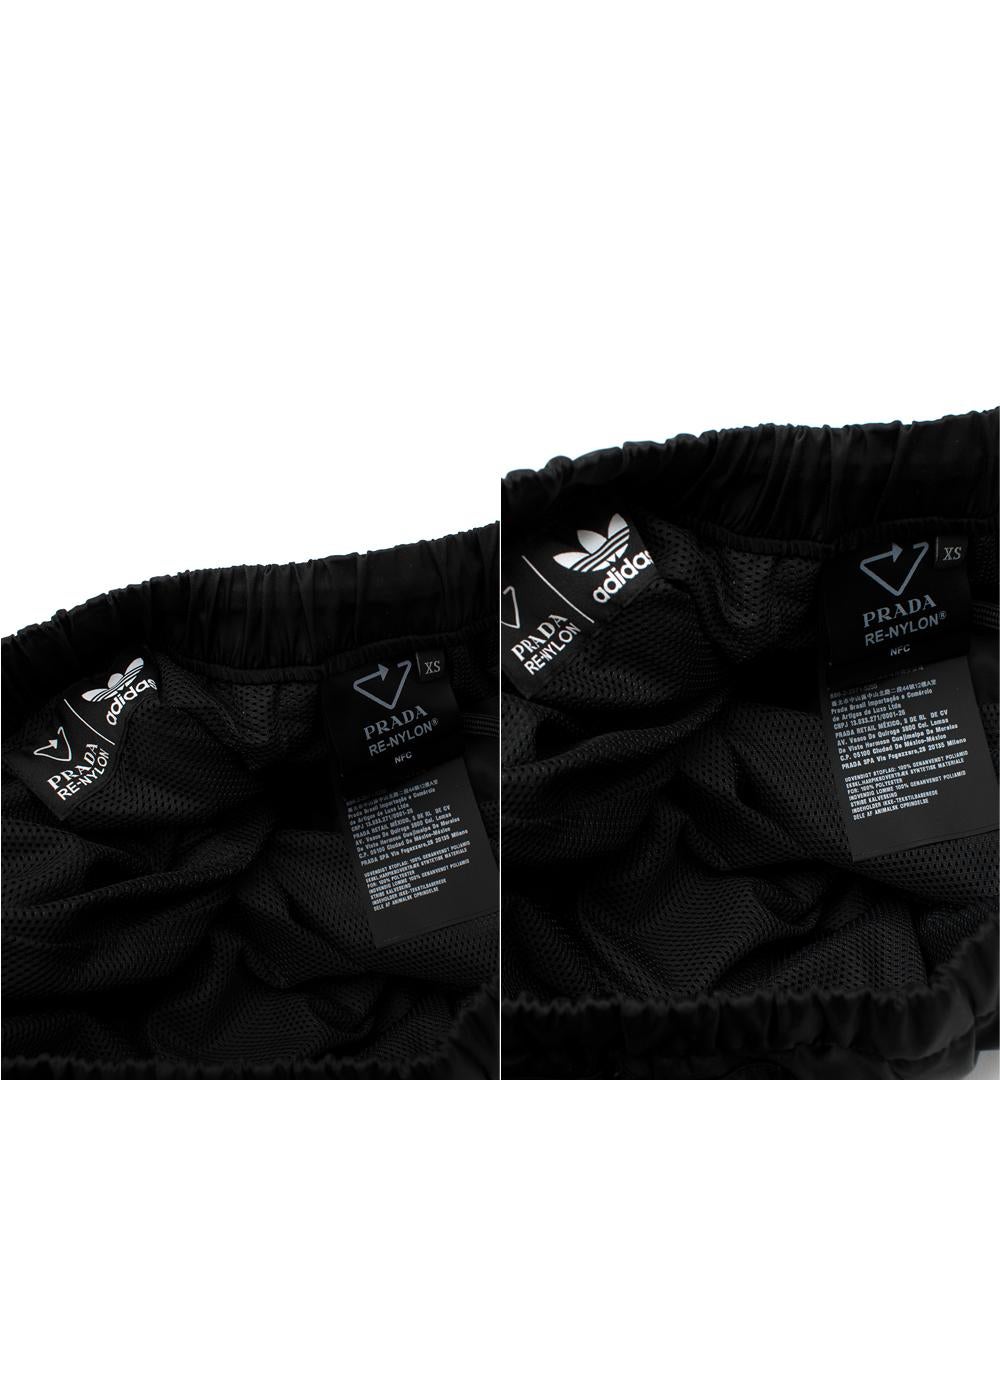 Prada x Adidas Re-Nylon Track Jacket & Joggers For Sale 7